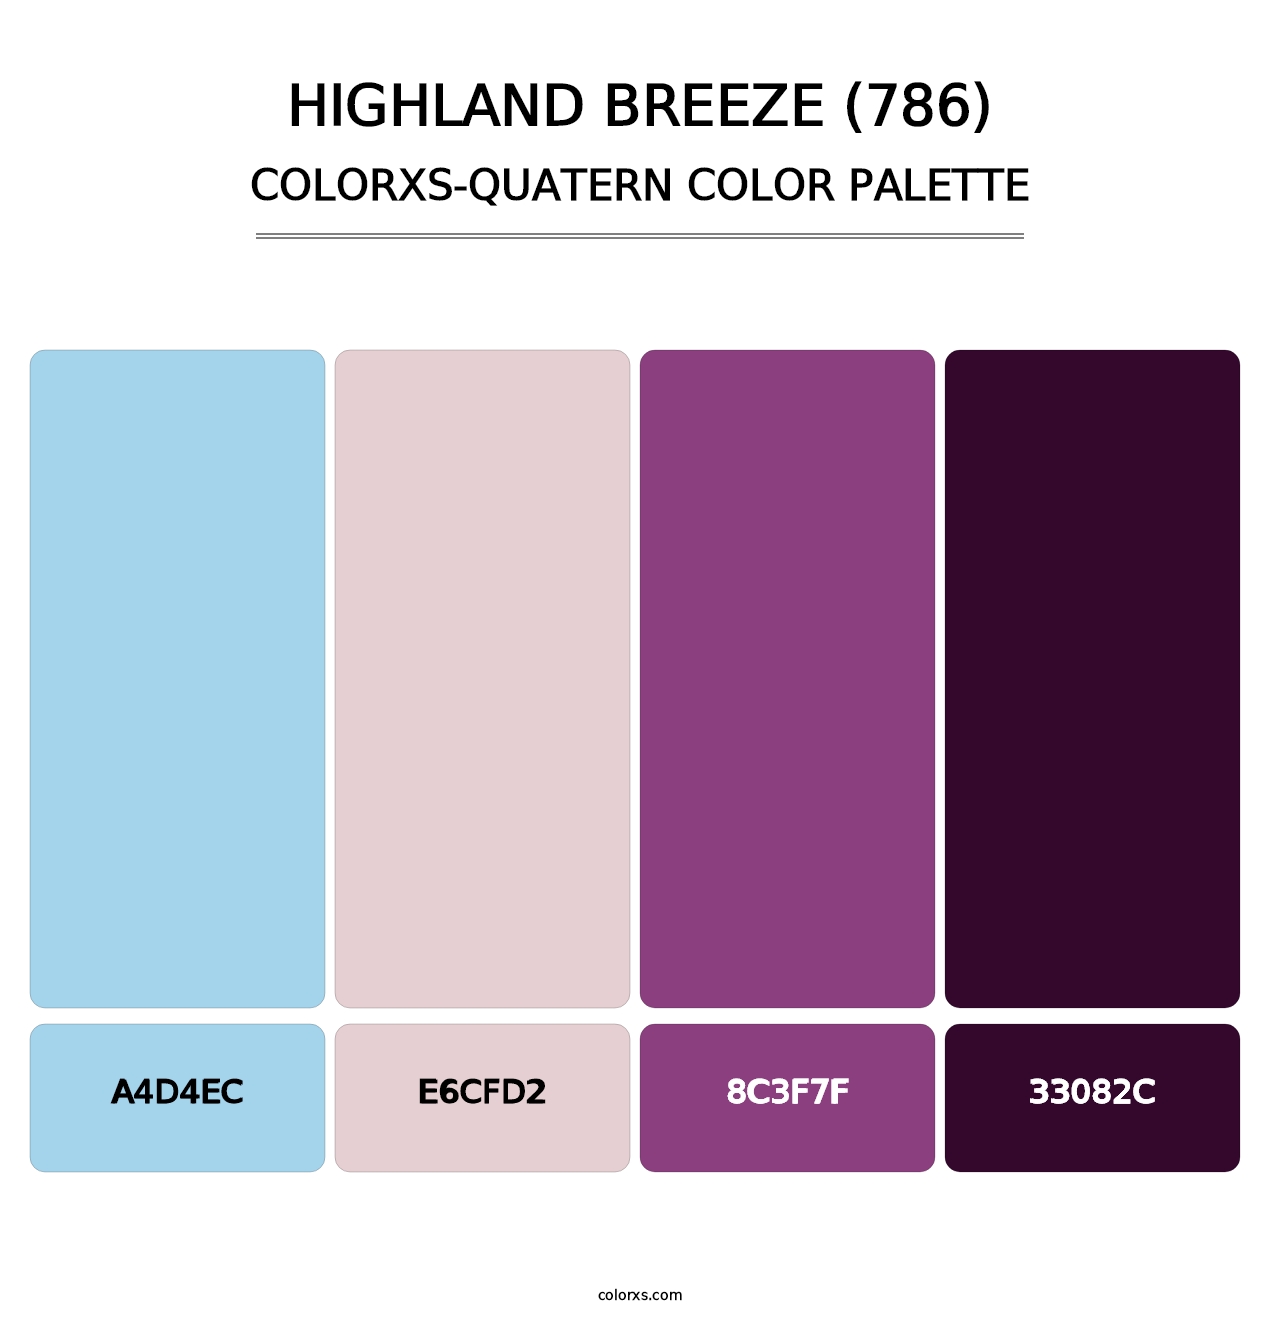 Highland Breeze (786) - Colorxs Quatern Palette